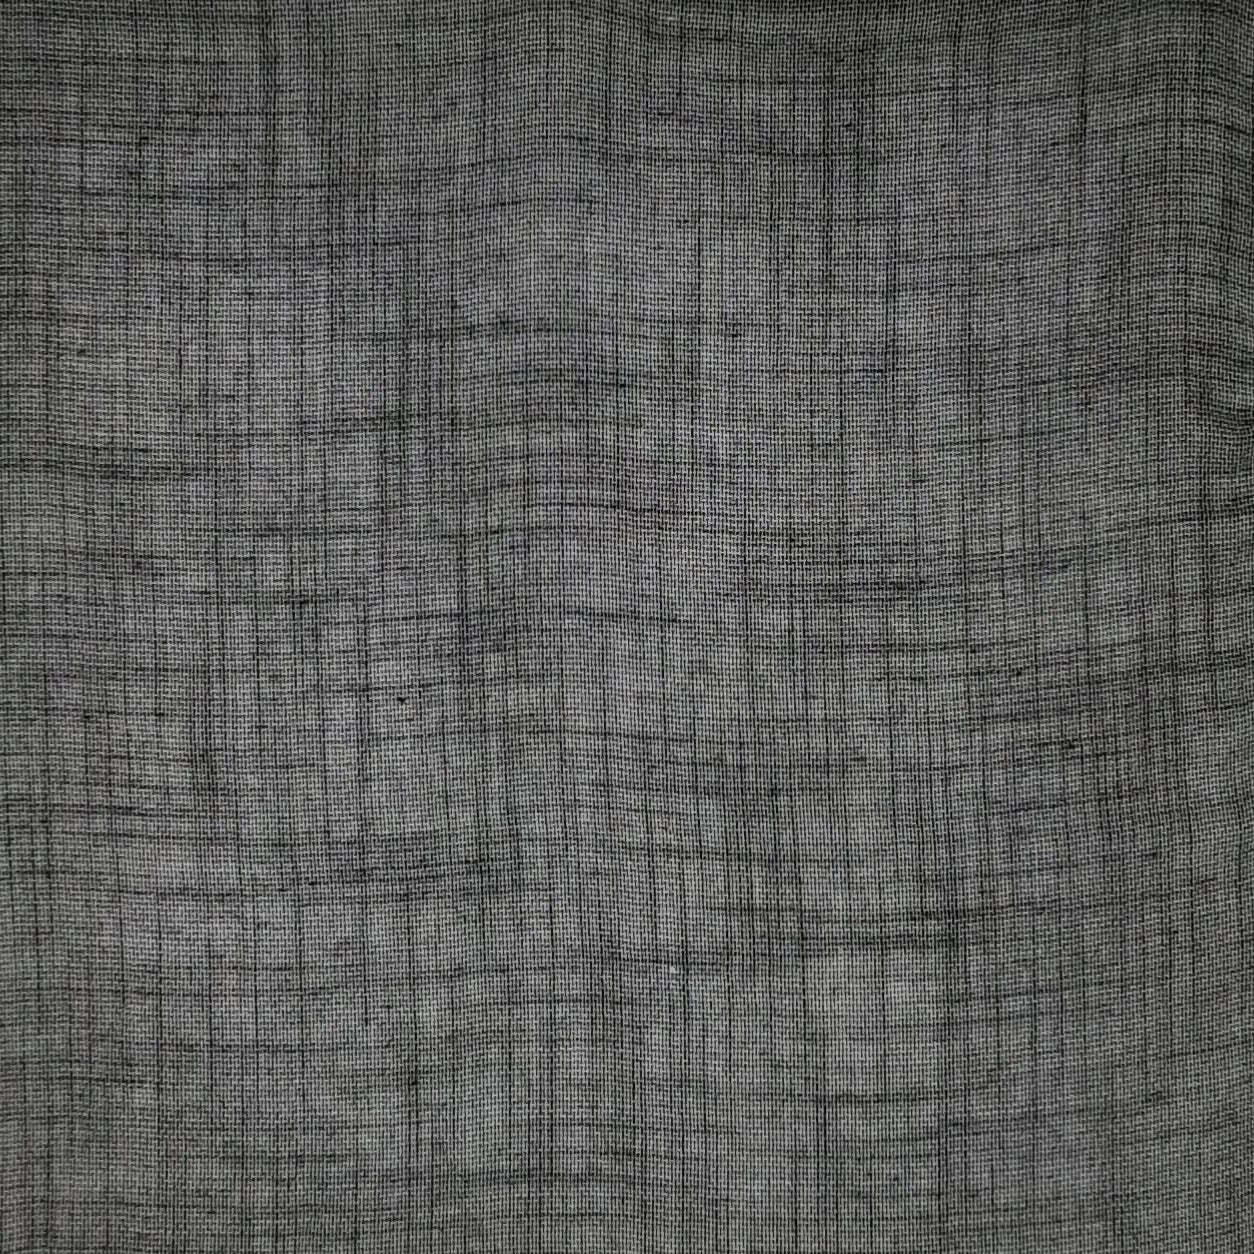 Black Rayon Challis Solid Fabric